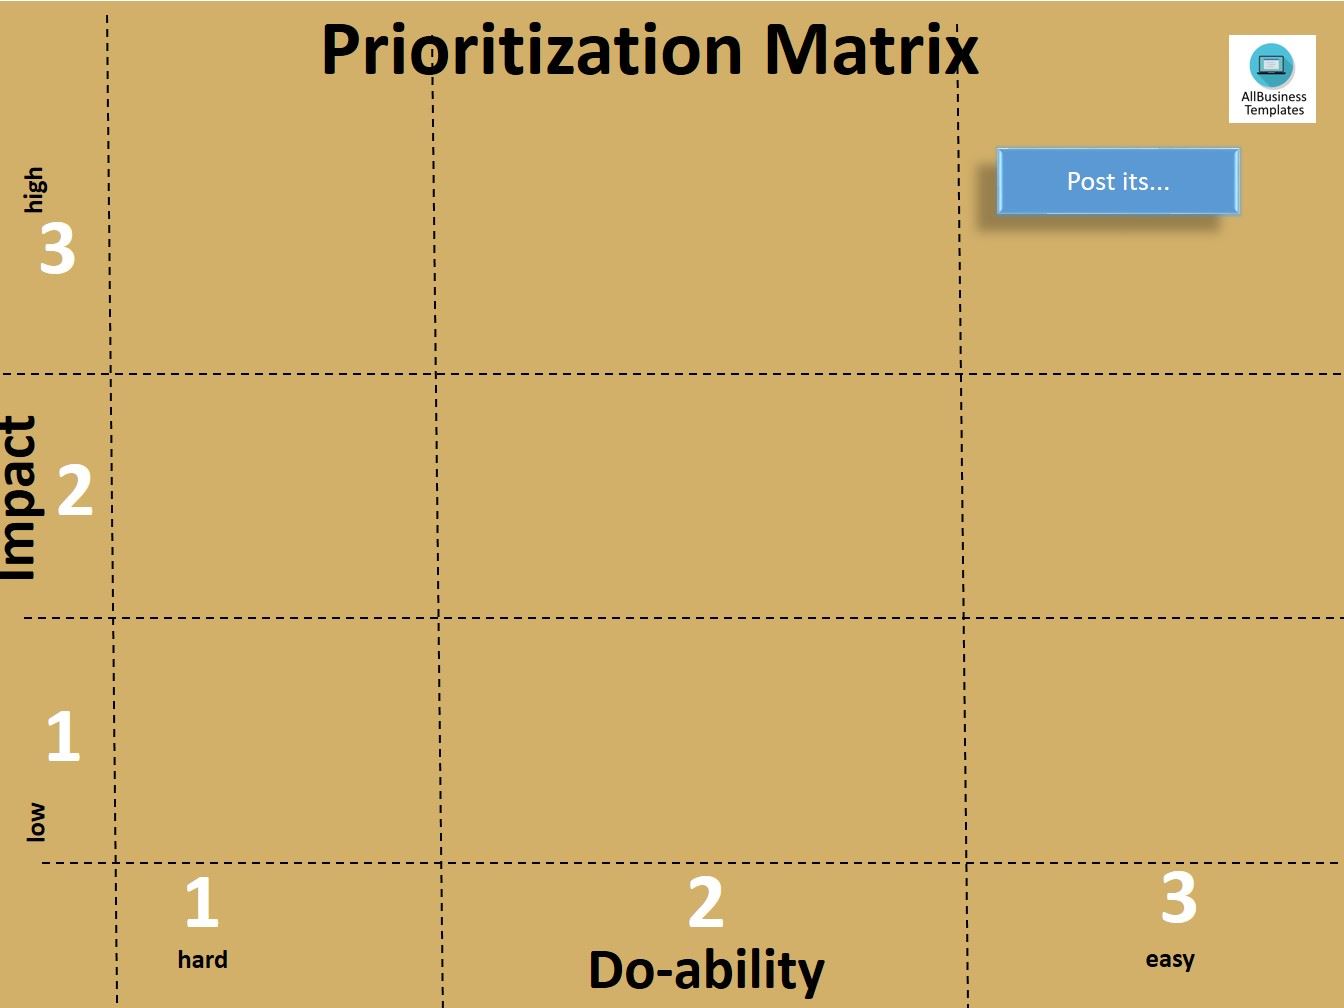 Prioritization Matrix A3 main image